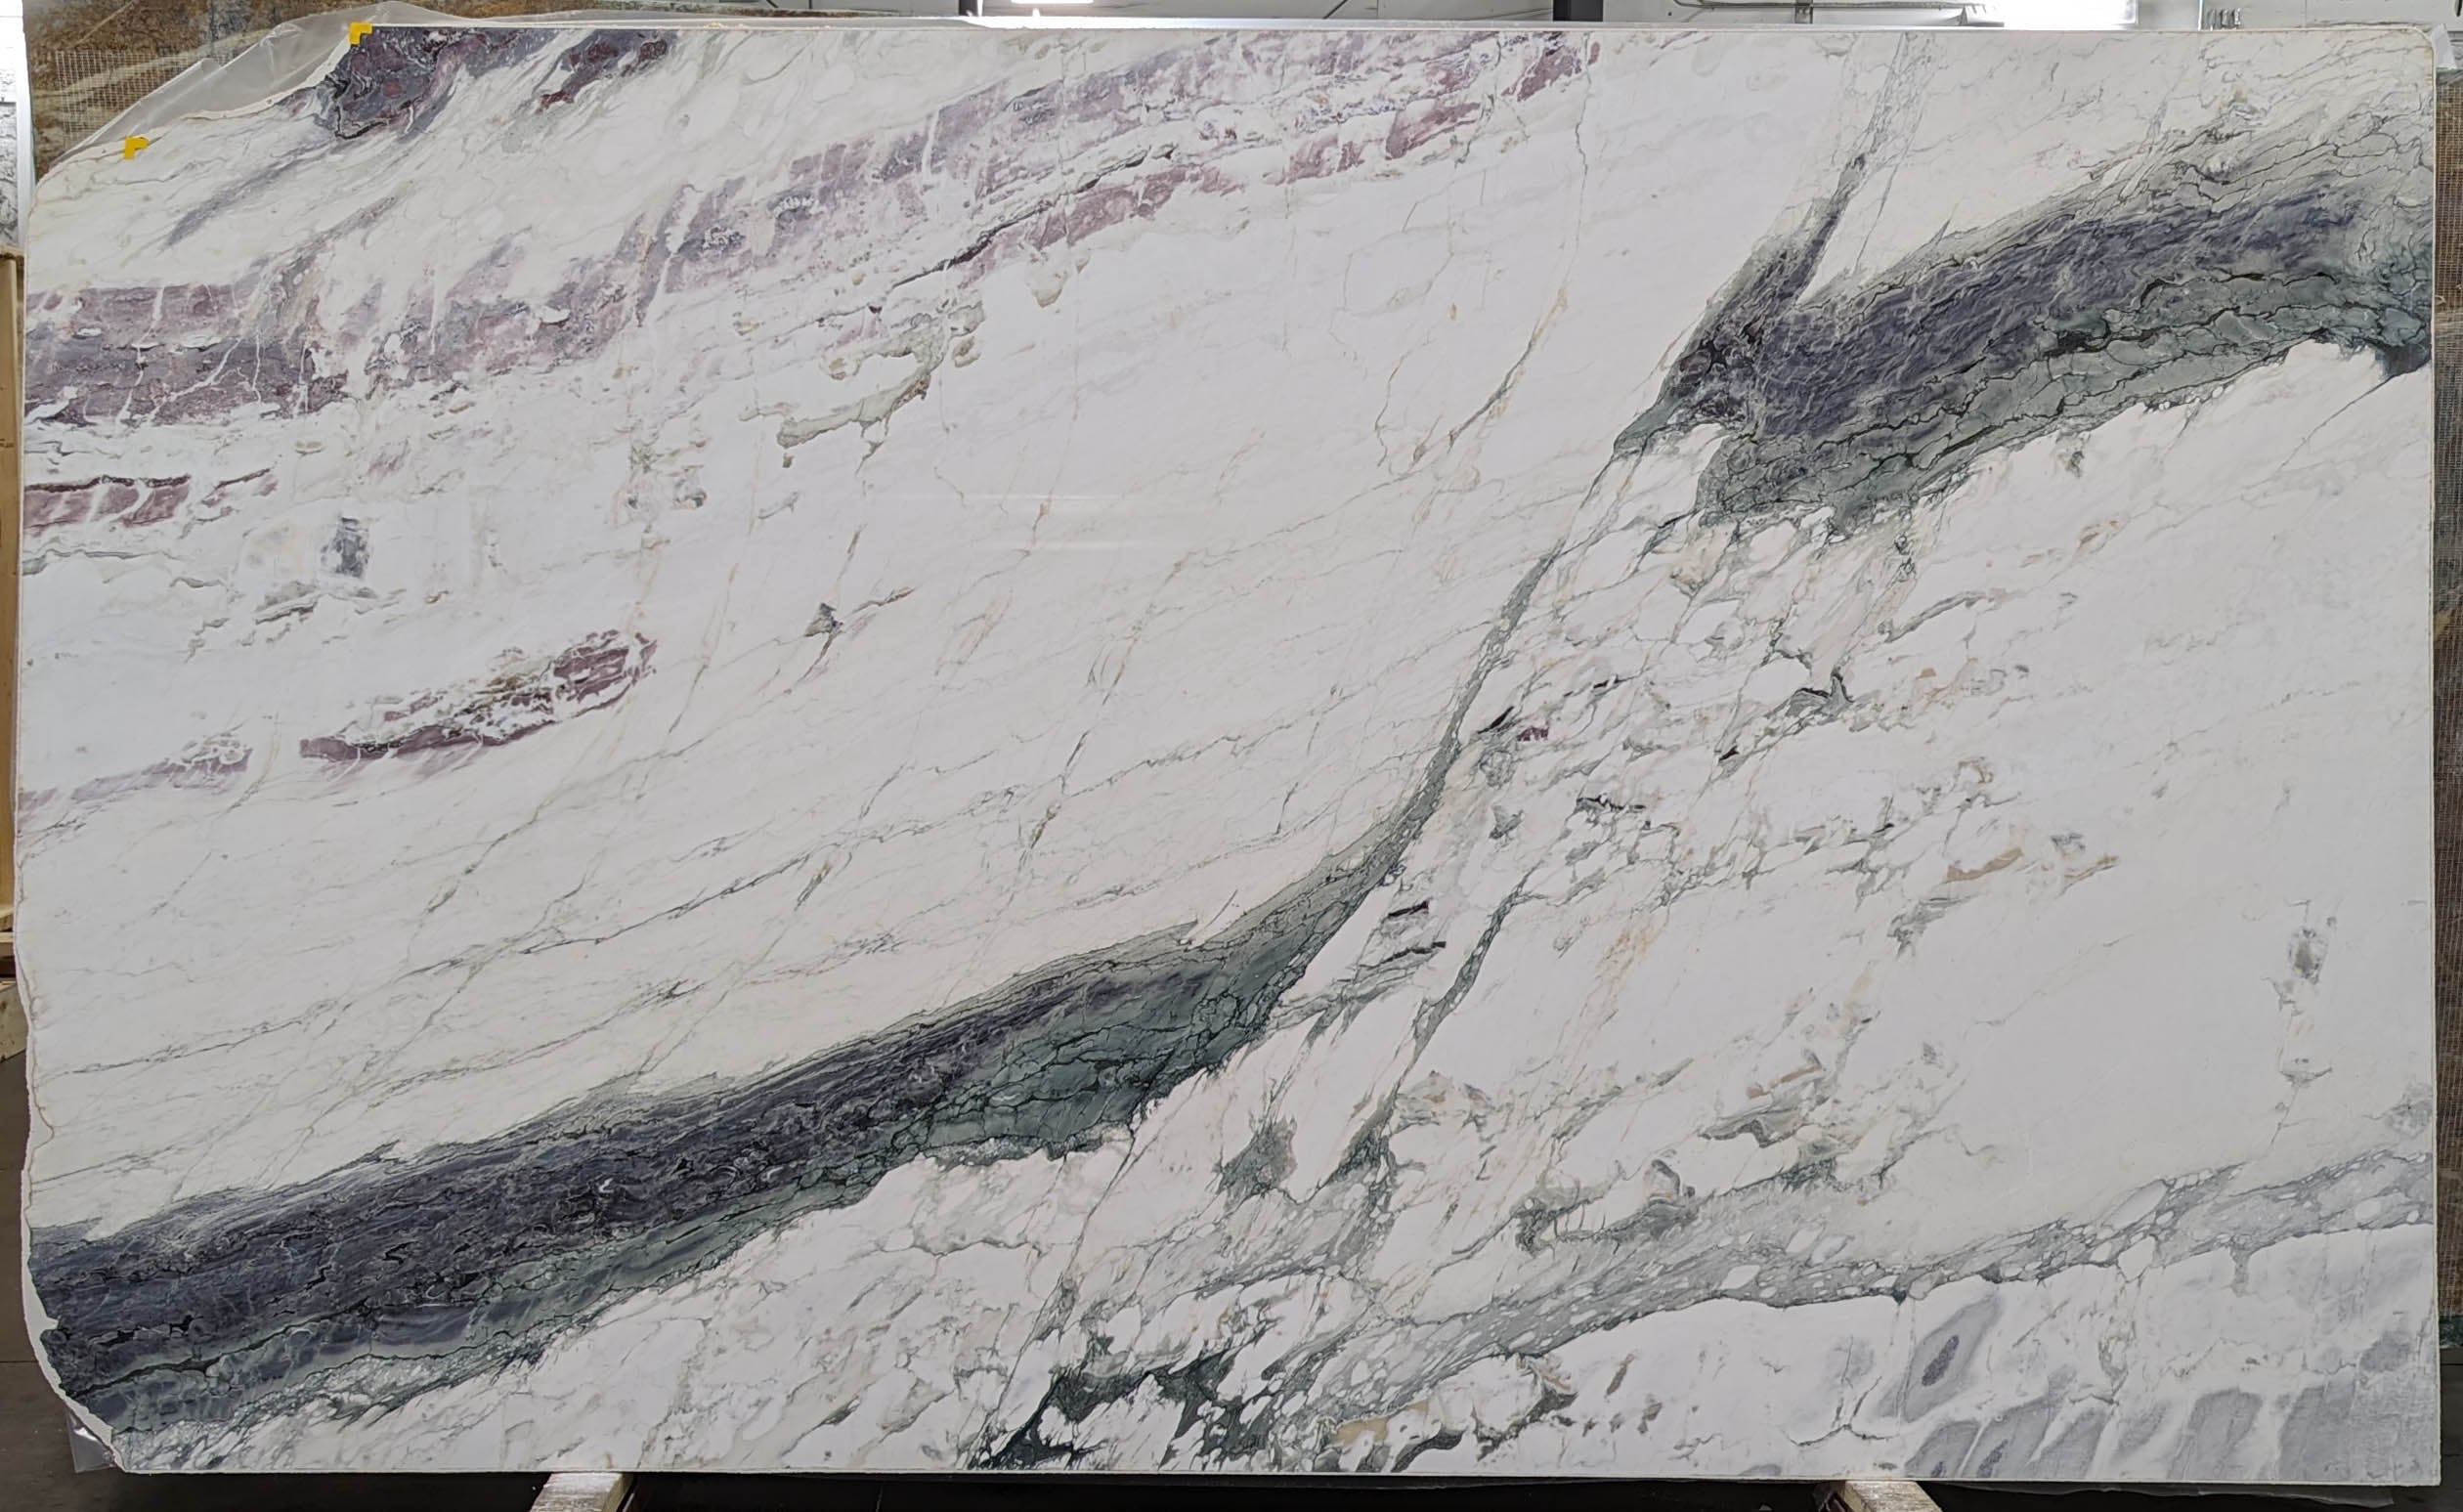  Breccia Capraia Marble Slab 3/4  Polished Stone - VR7428#47 -  72x105 